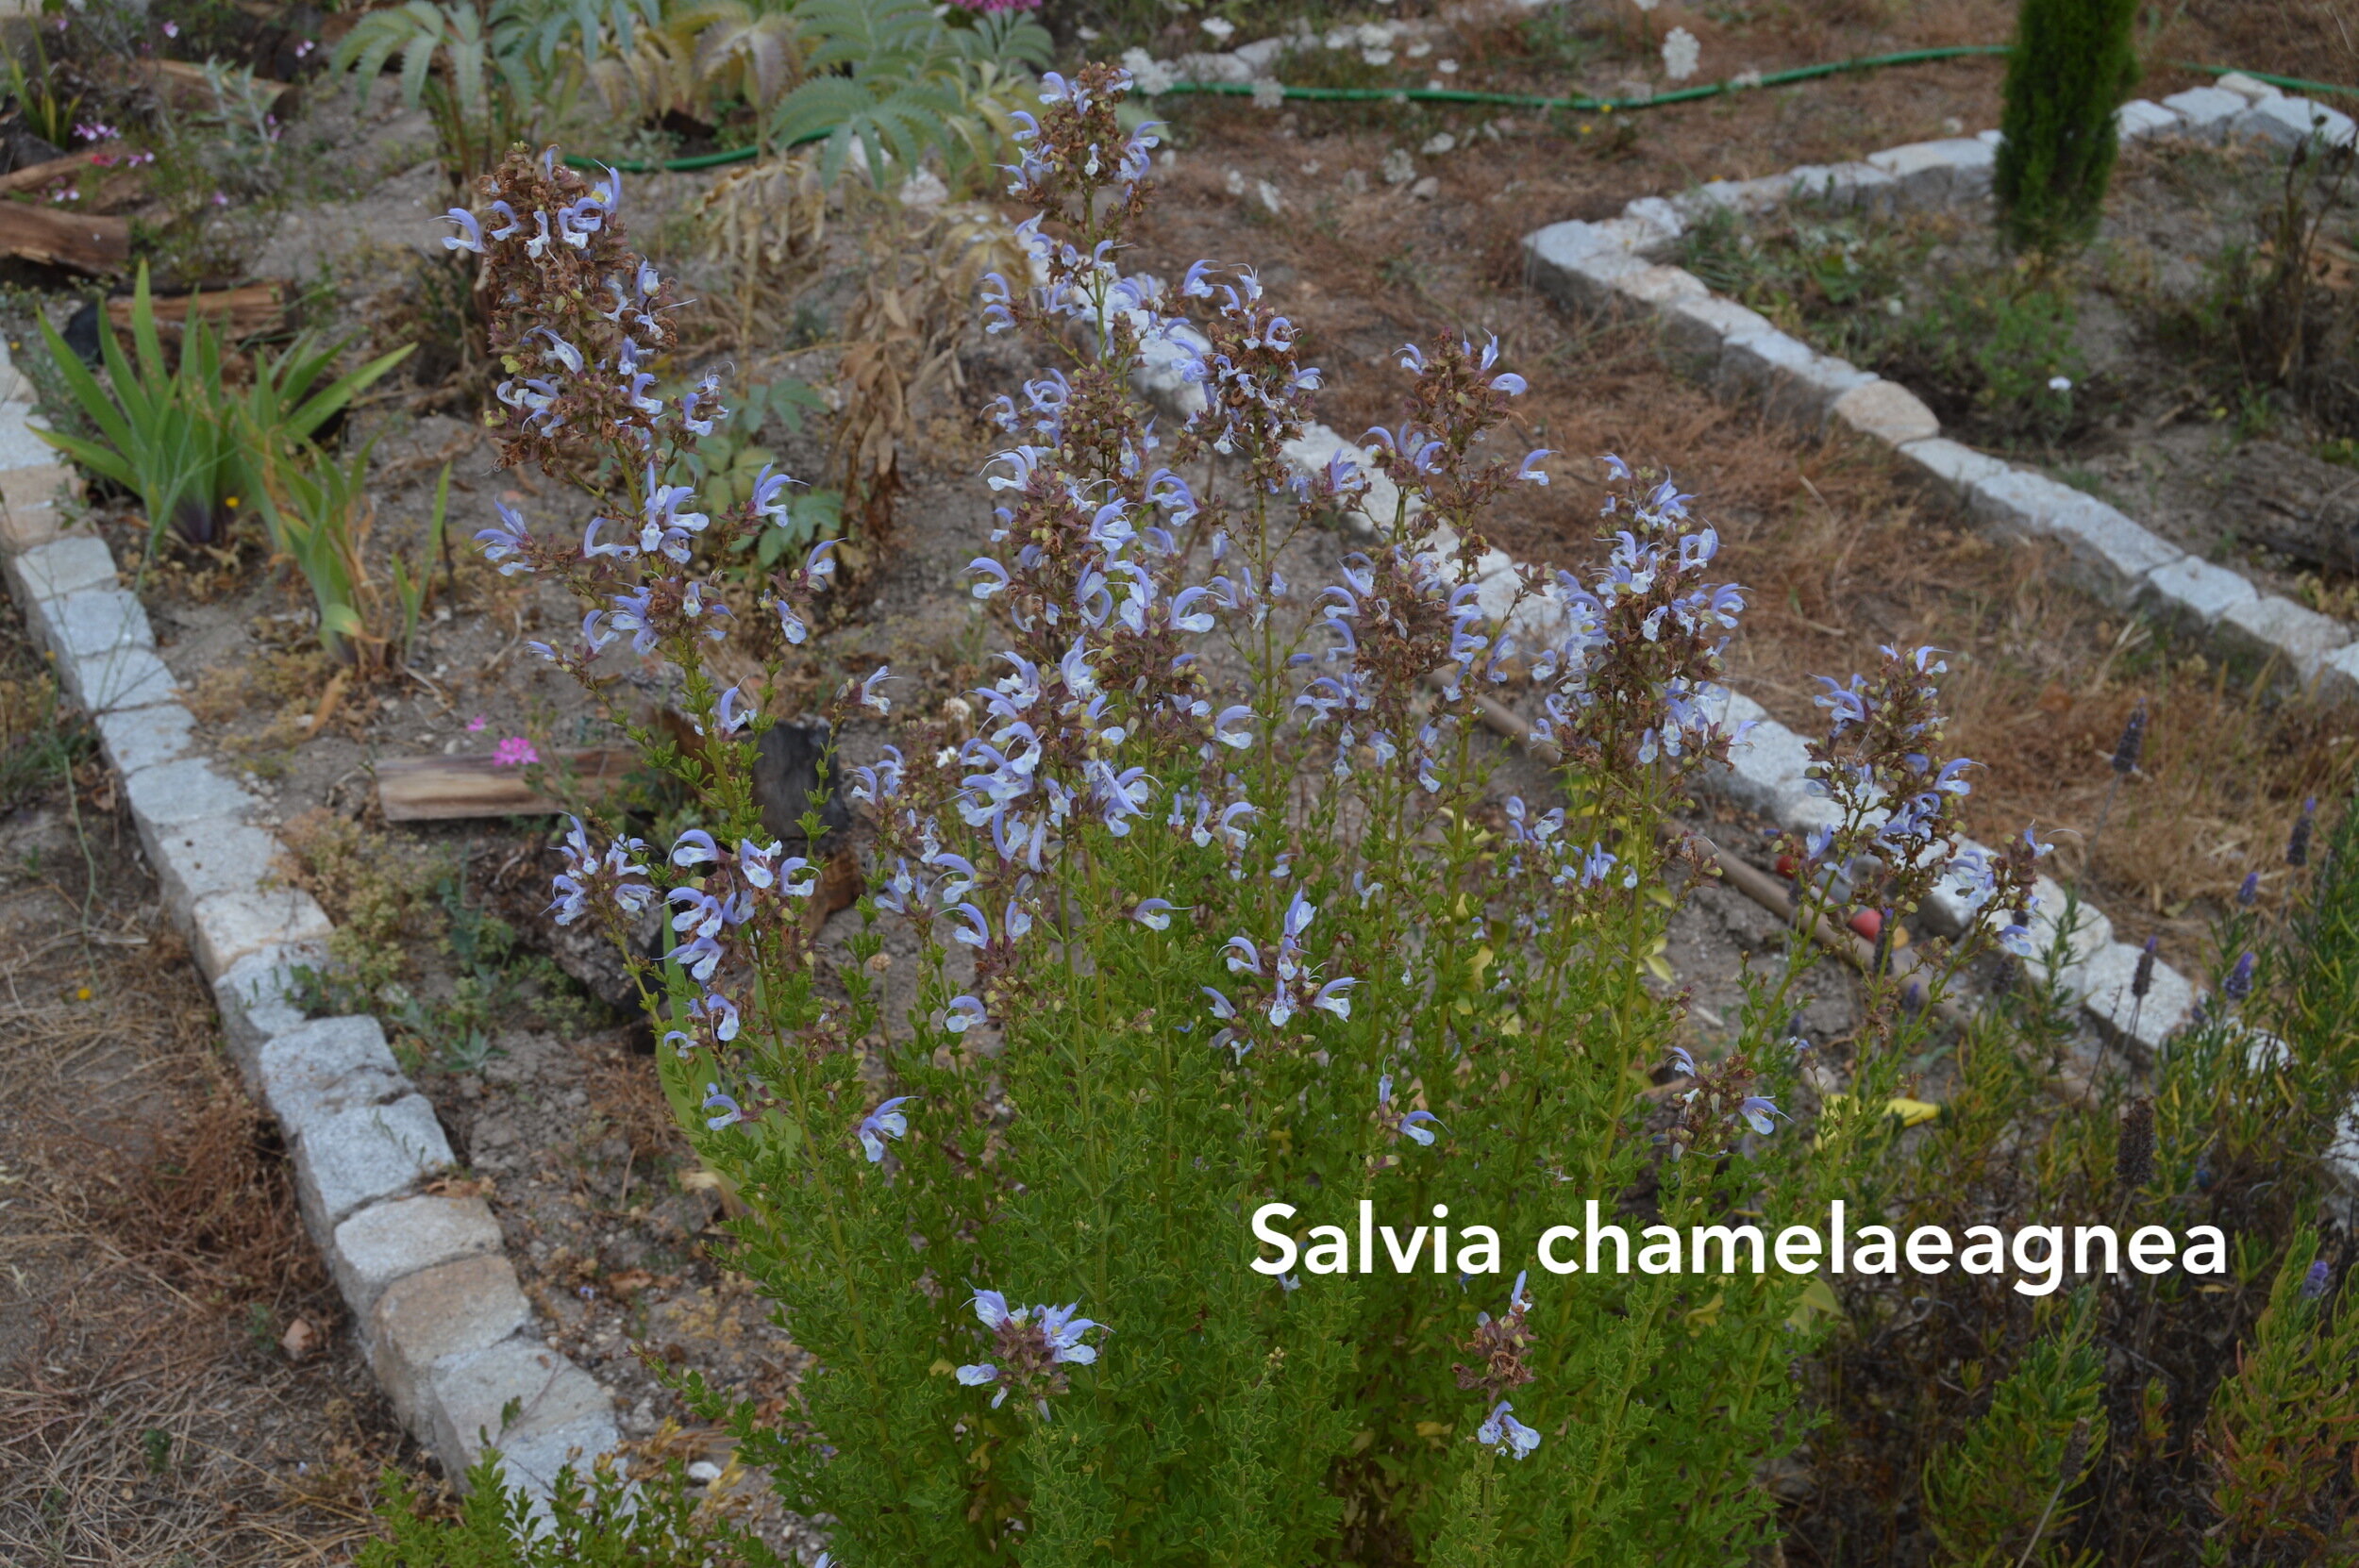 Salvia chamelaeagnea copy.jpg